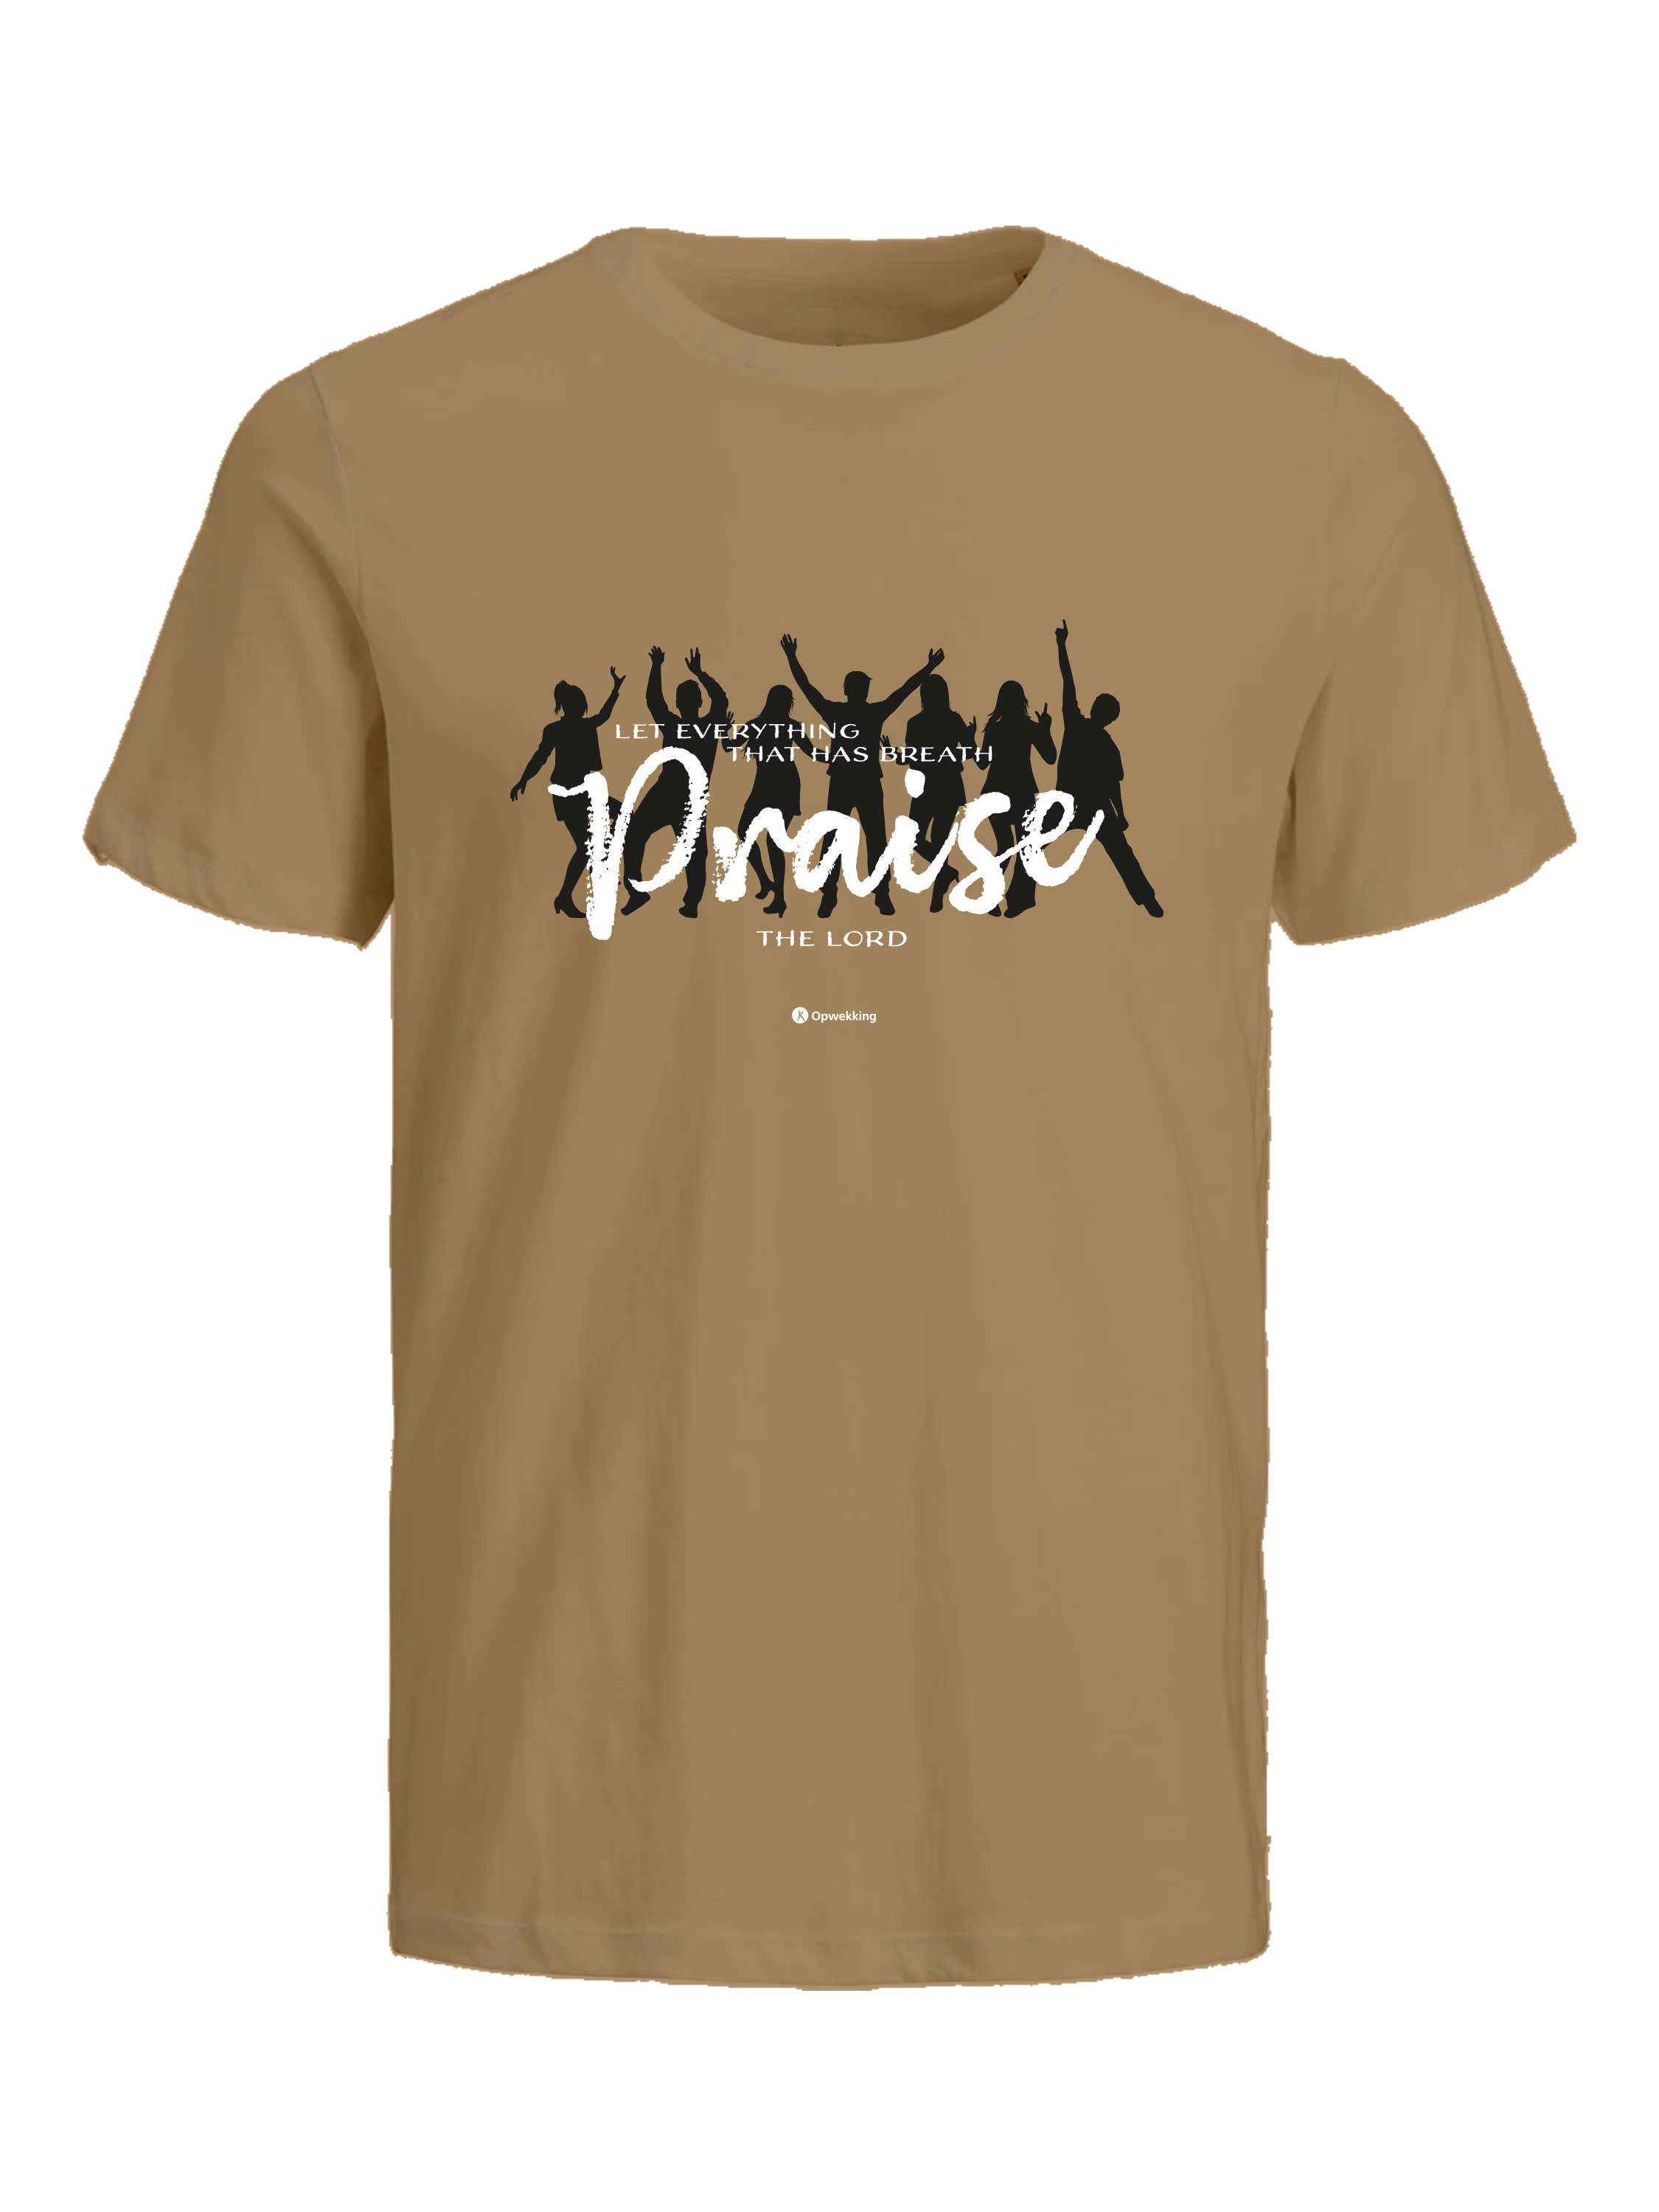 Tshirt_Praise_Sand